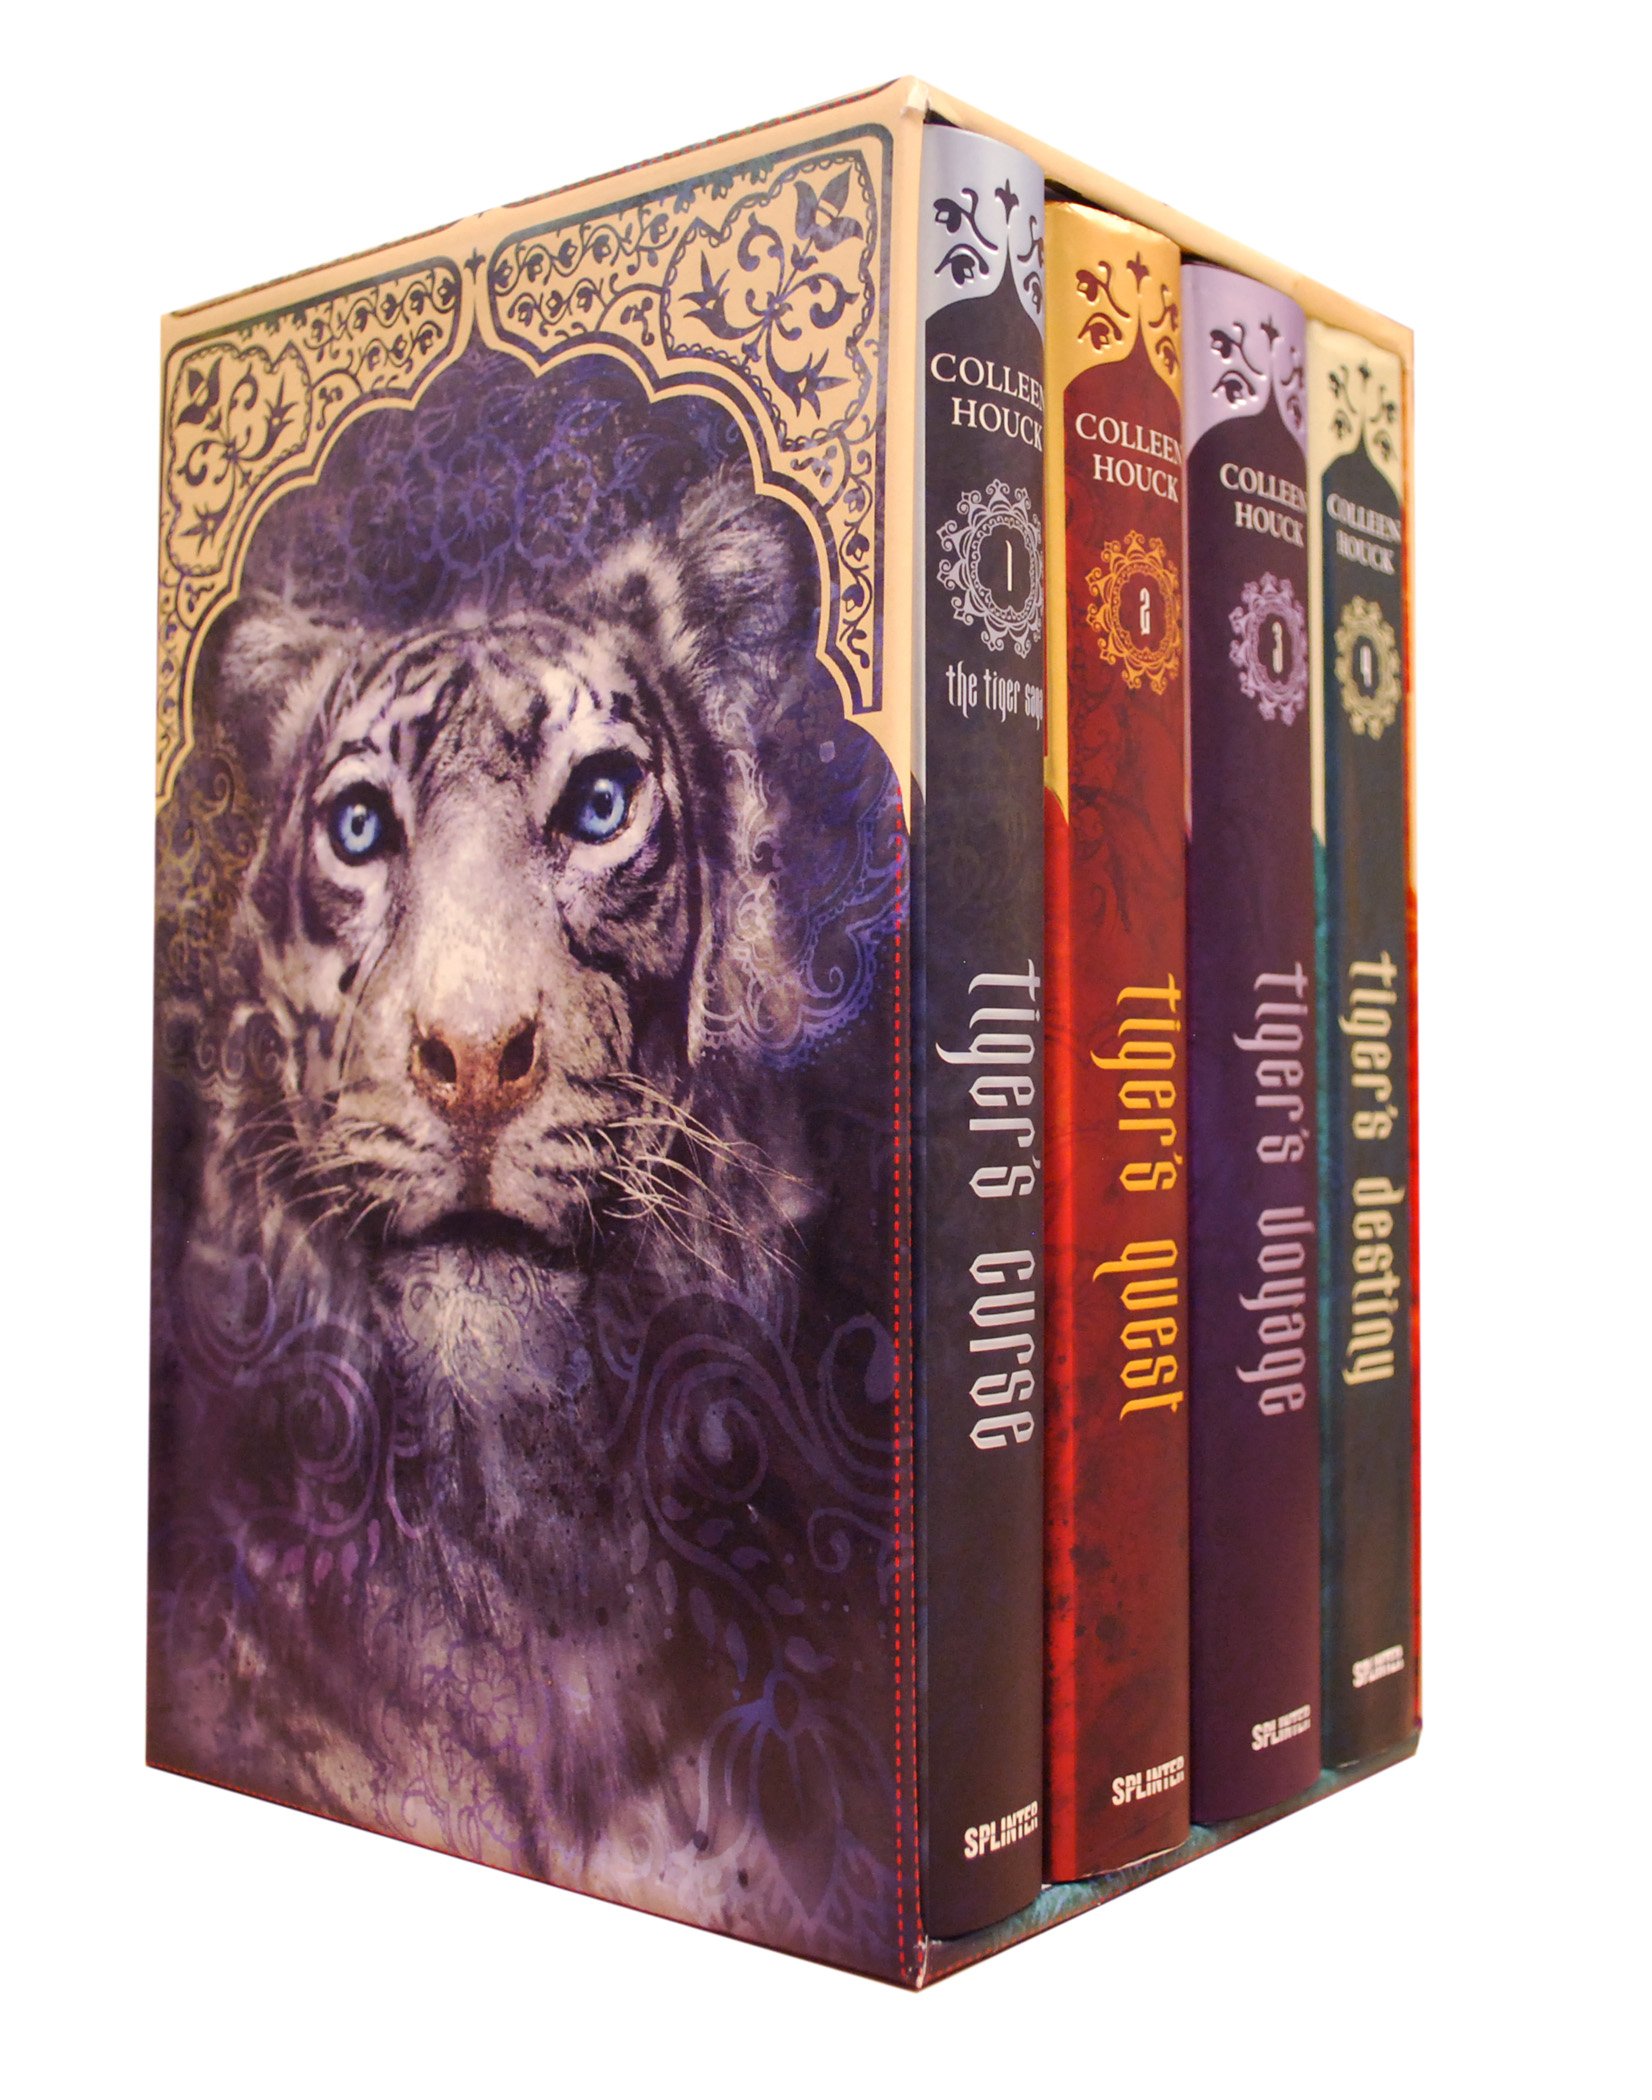 Tiger's Curse Collector's Boxed Set